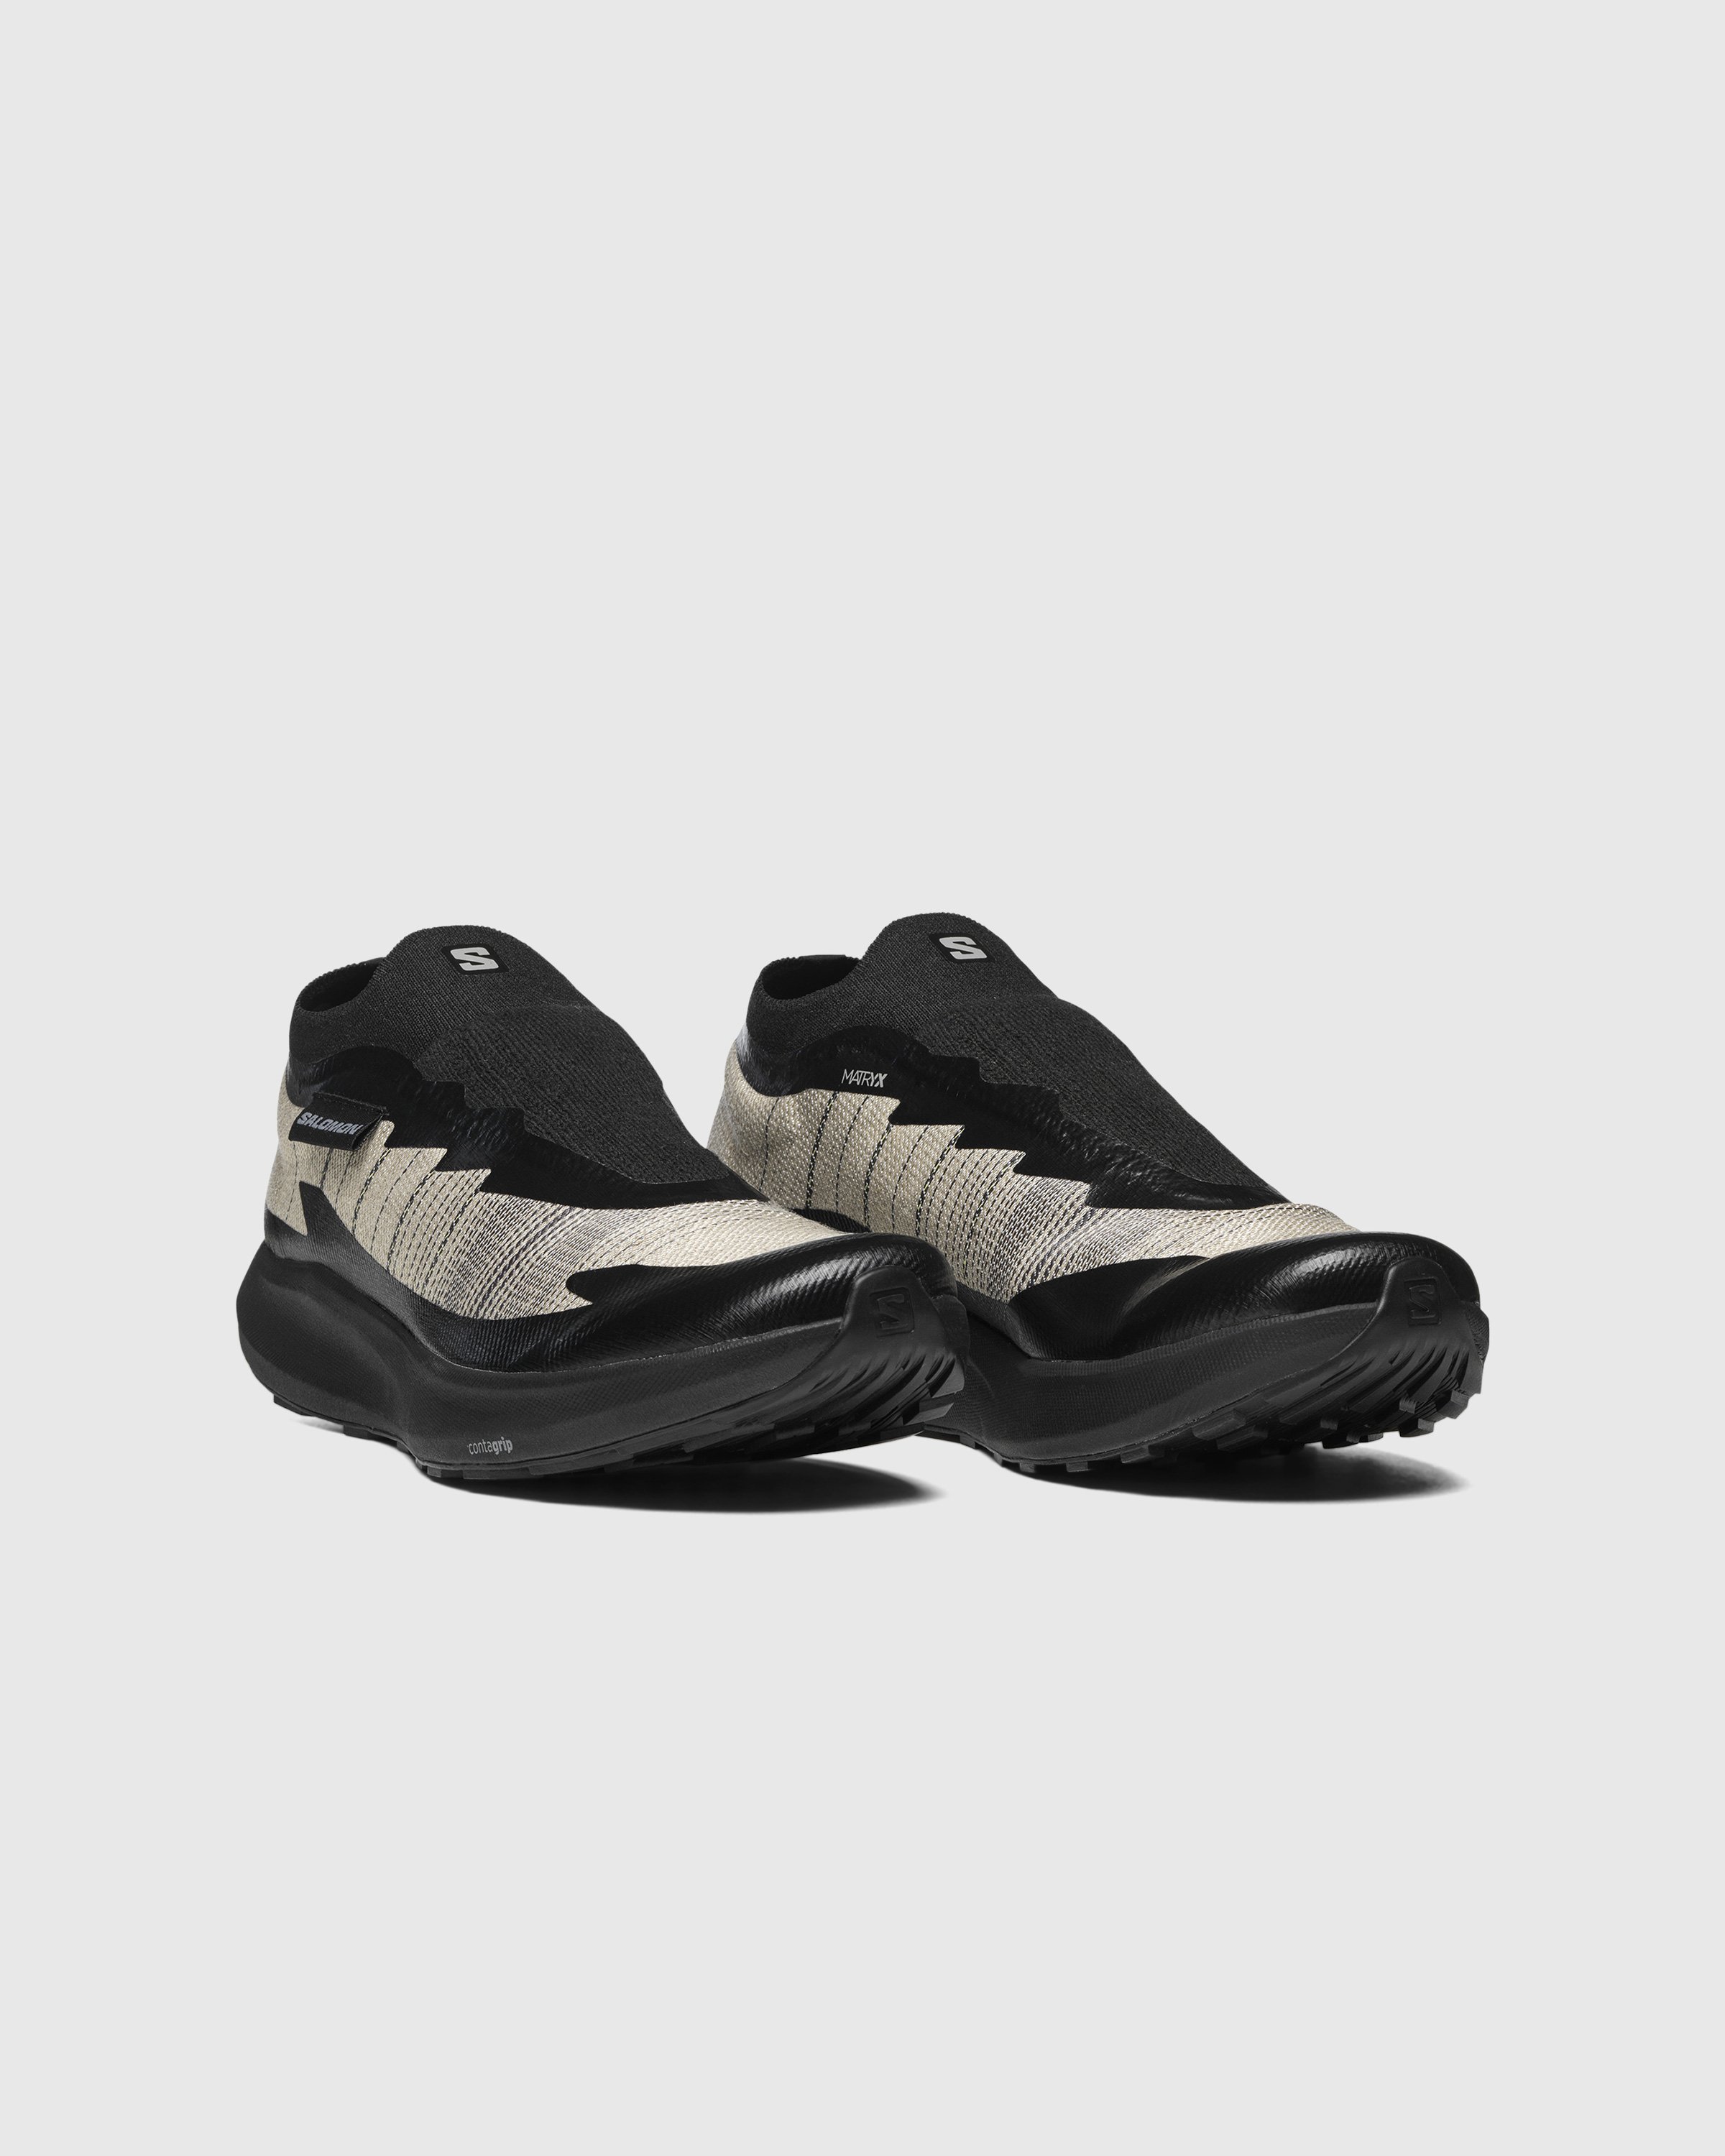 Salomon - PULSAR ADVANCED Black/Black/Pewter - Footwear - Black - Image 2